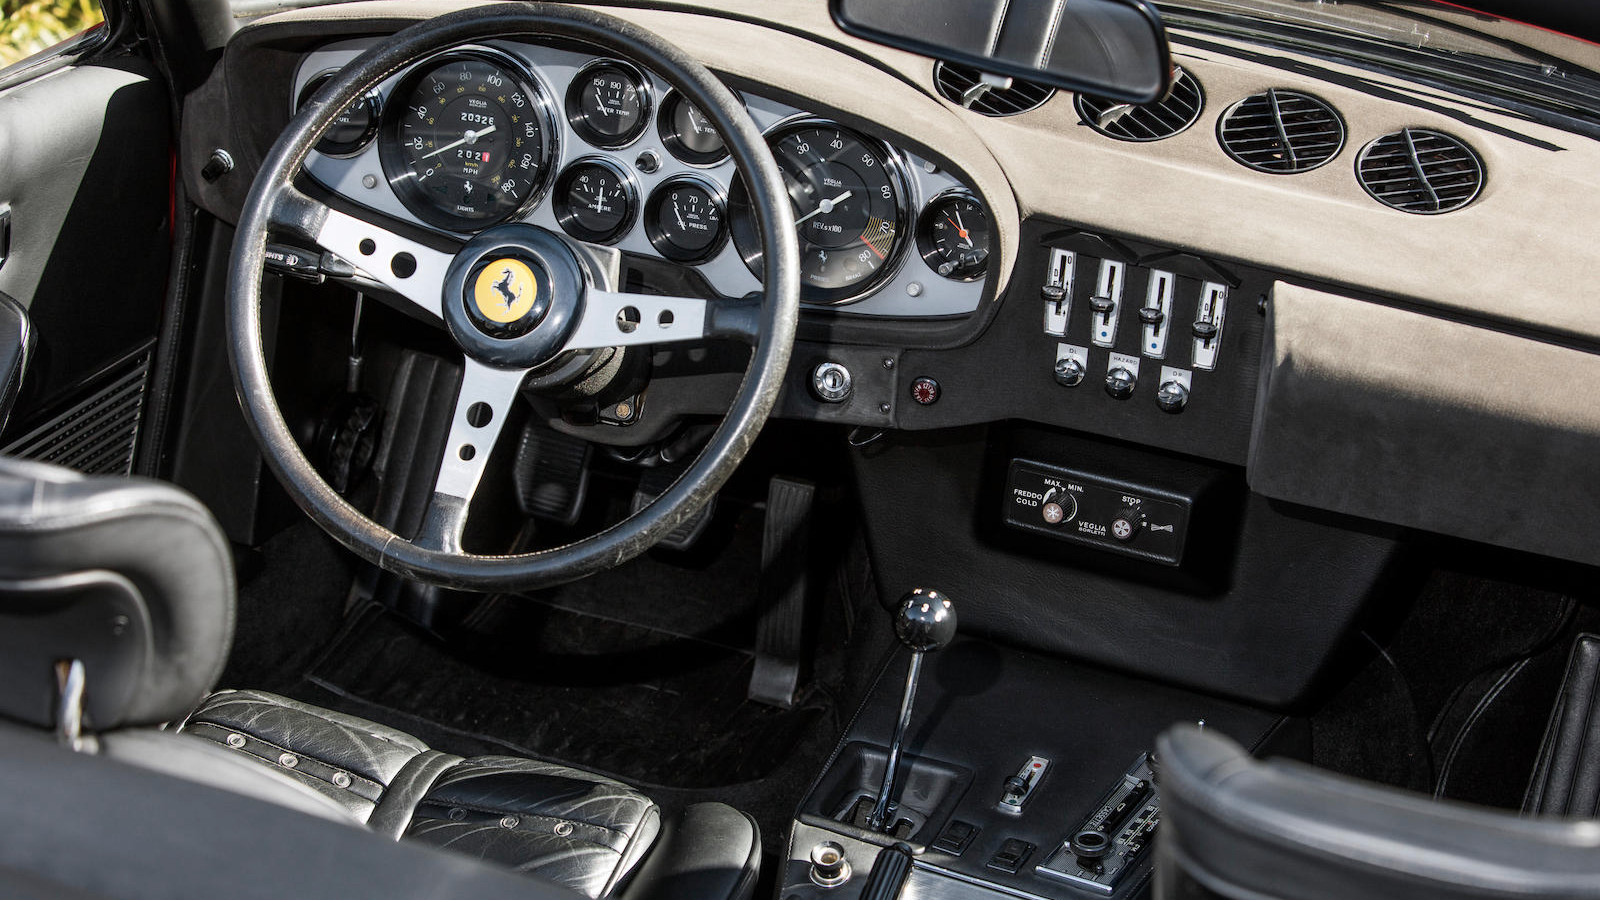 Ferrari 365 GTS/4 Daytona Spider up for sale at Bonhams’ Amelia Island auction 